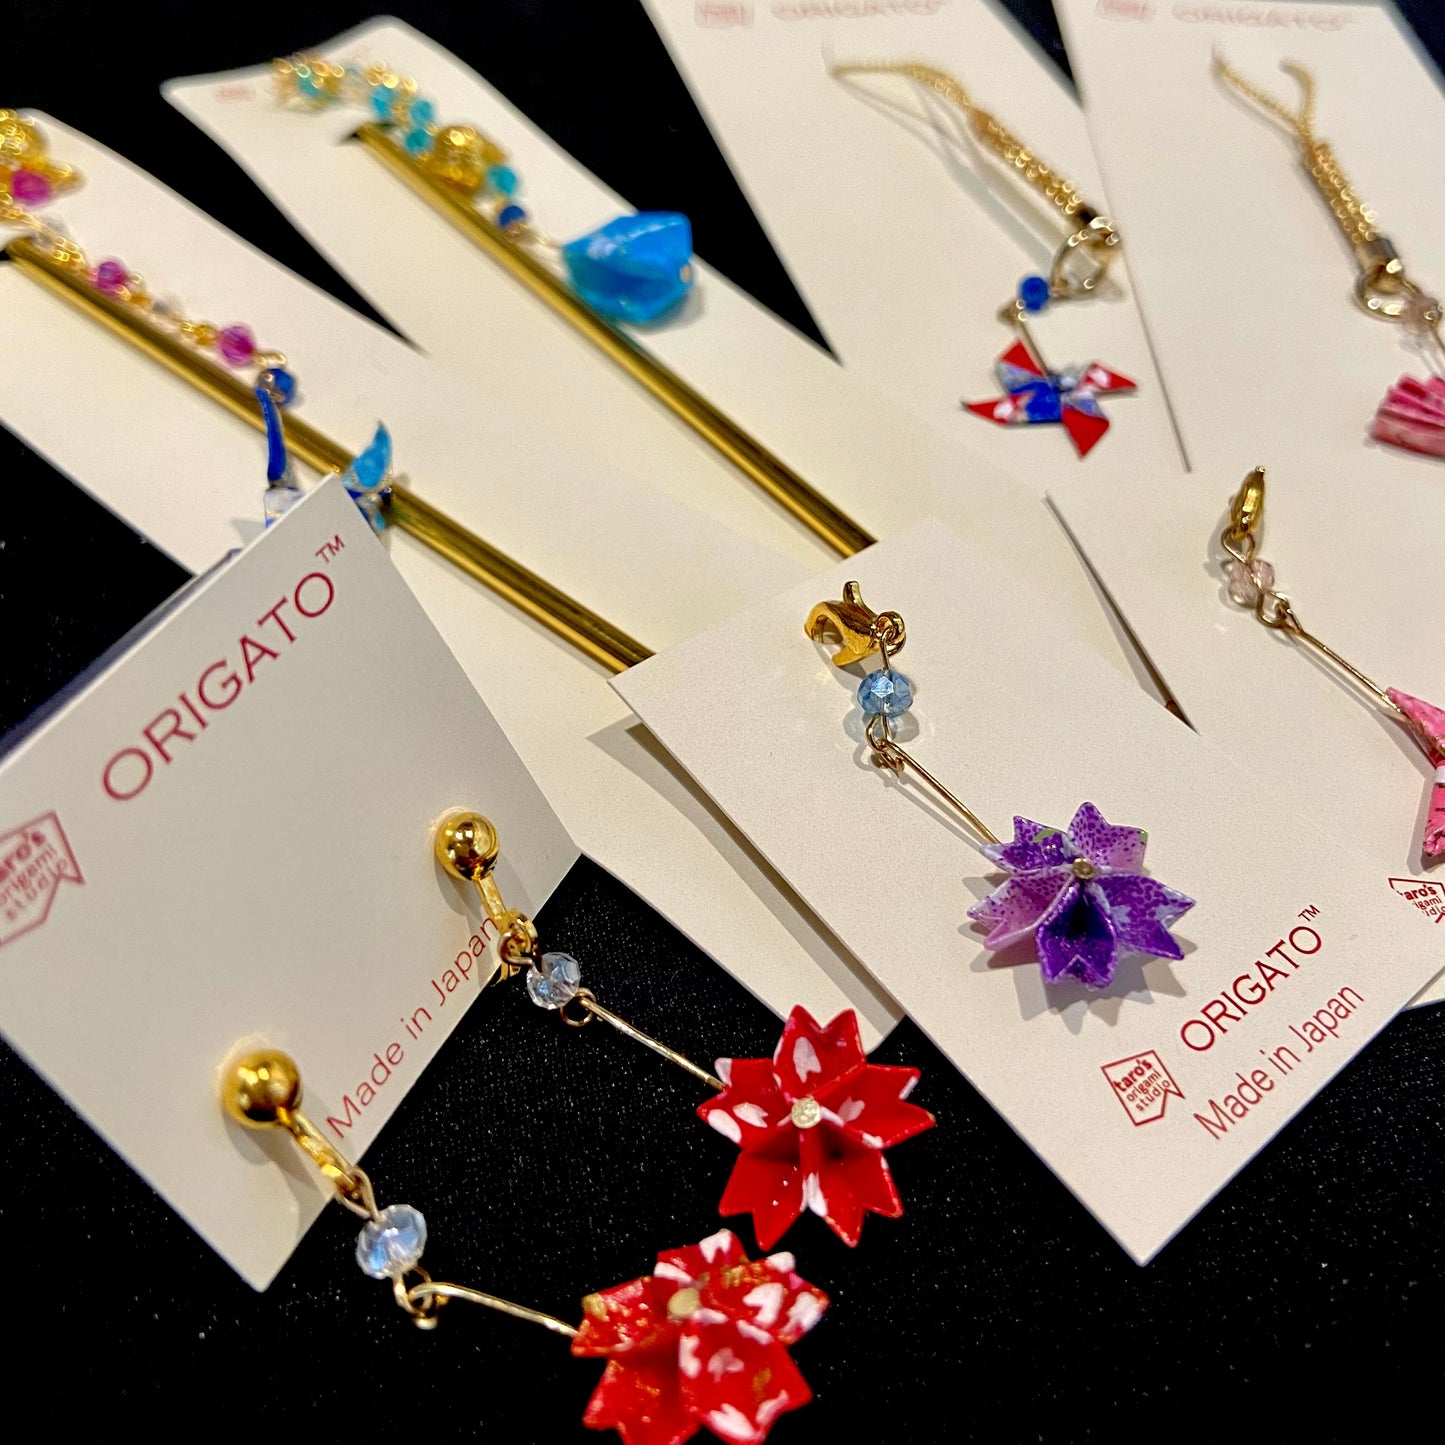 [ORIGATO] Earrings (pierced earrings) - Origami Accessories (Handmade in Japan)[Brooklyn Studio pickup only]